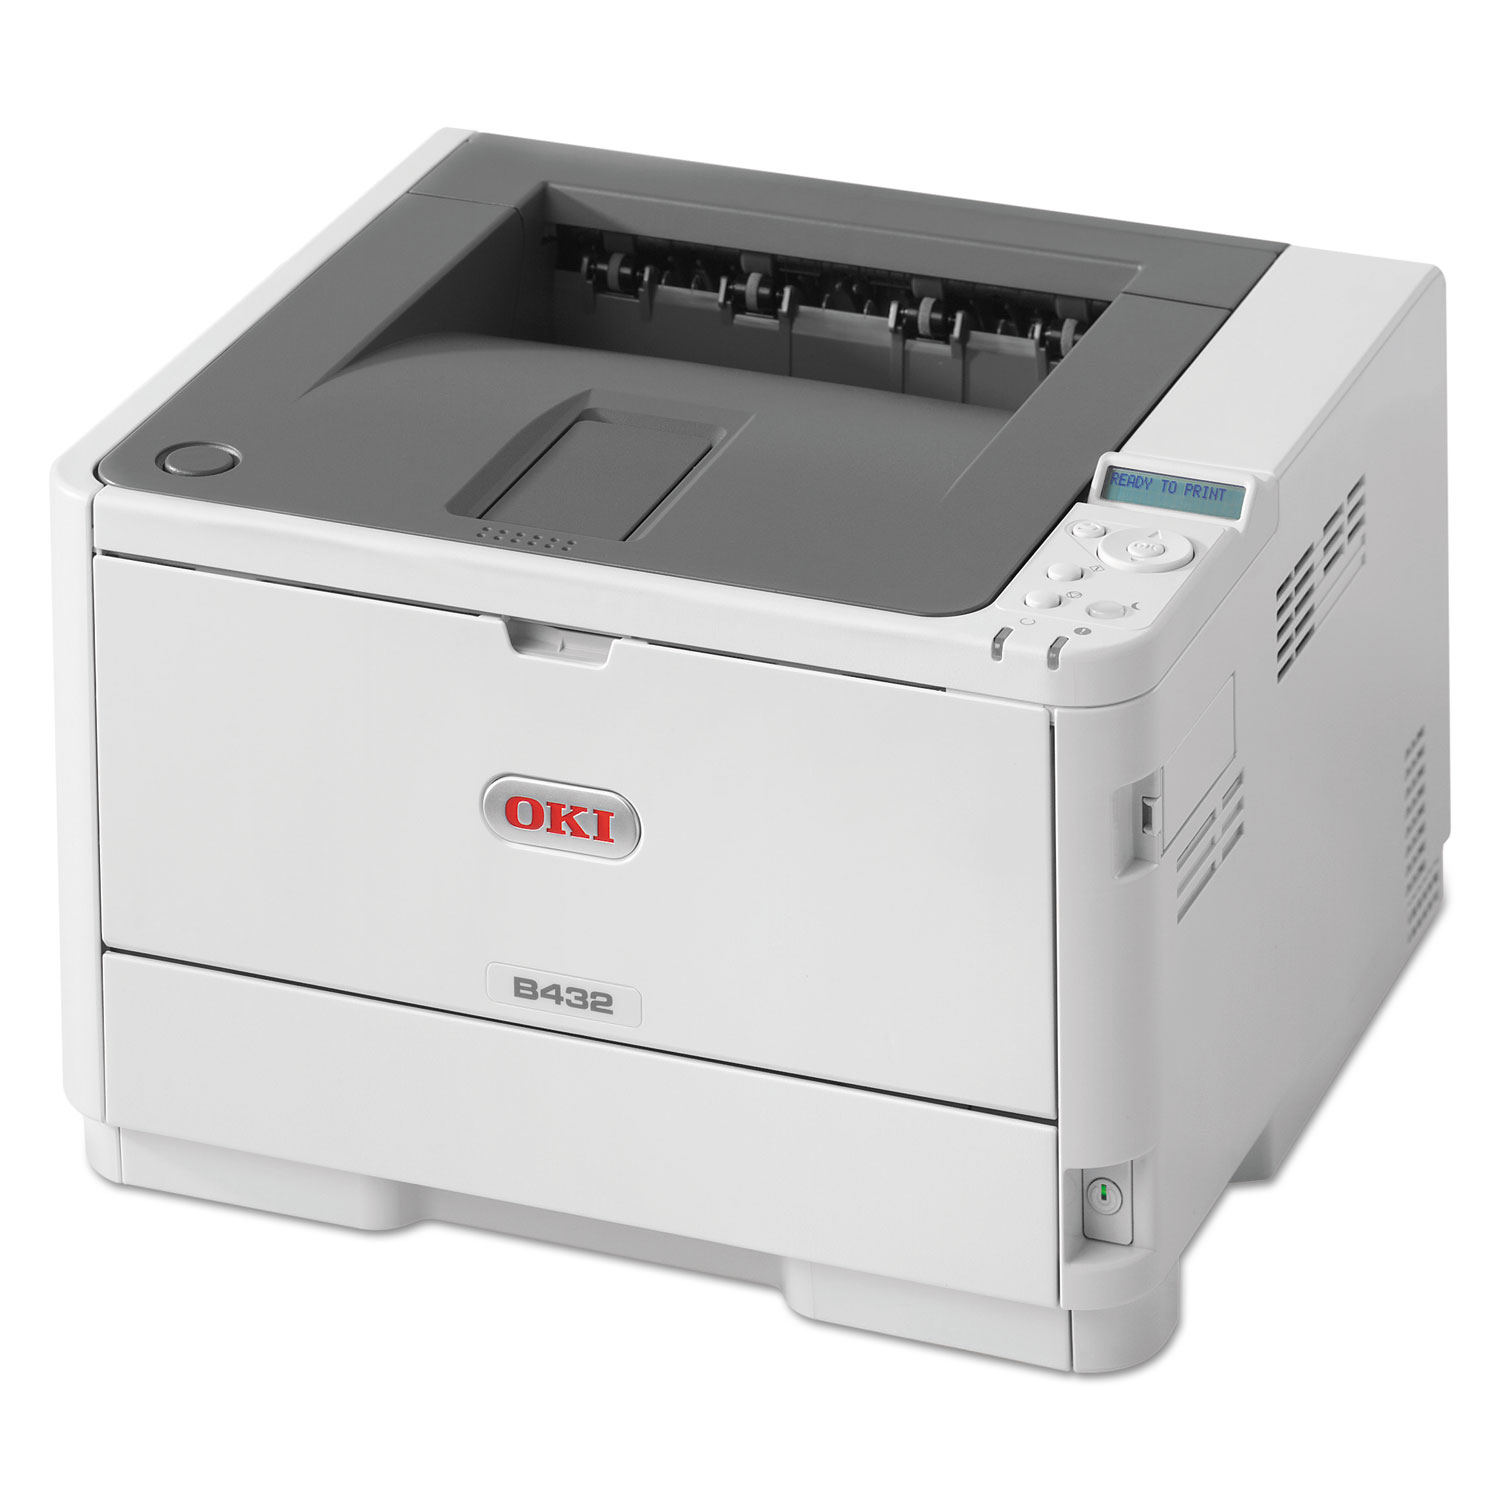 B432DN Monochrome Laser Printer